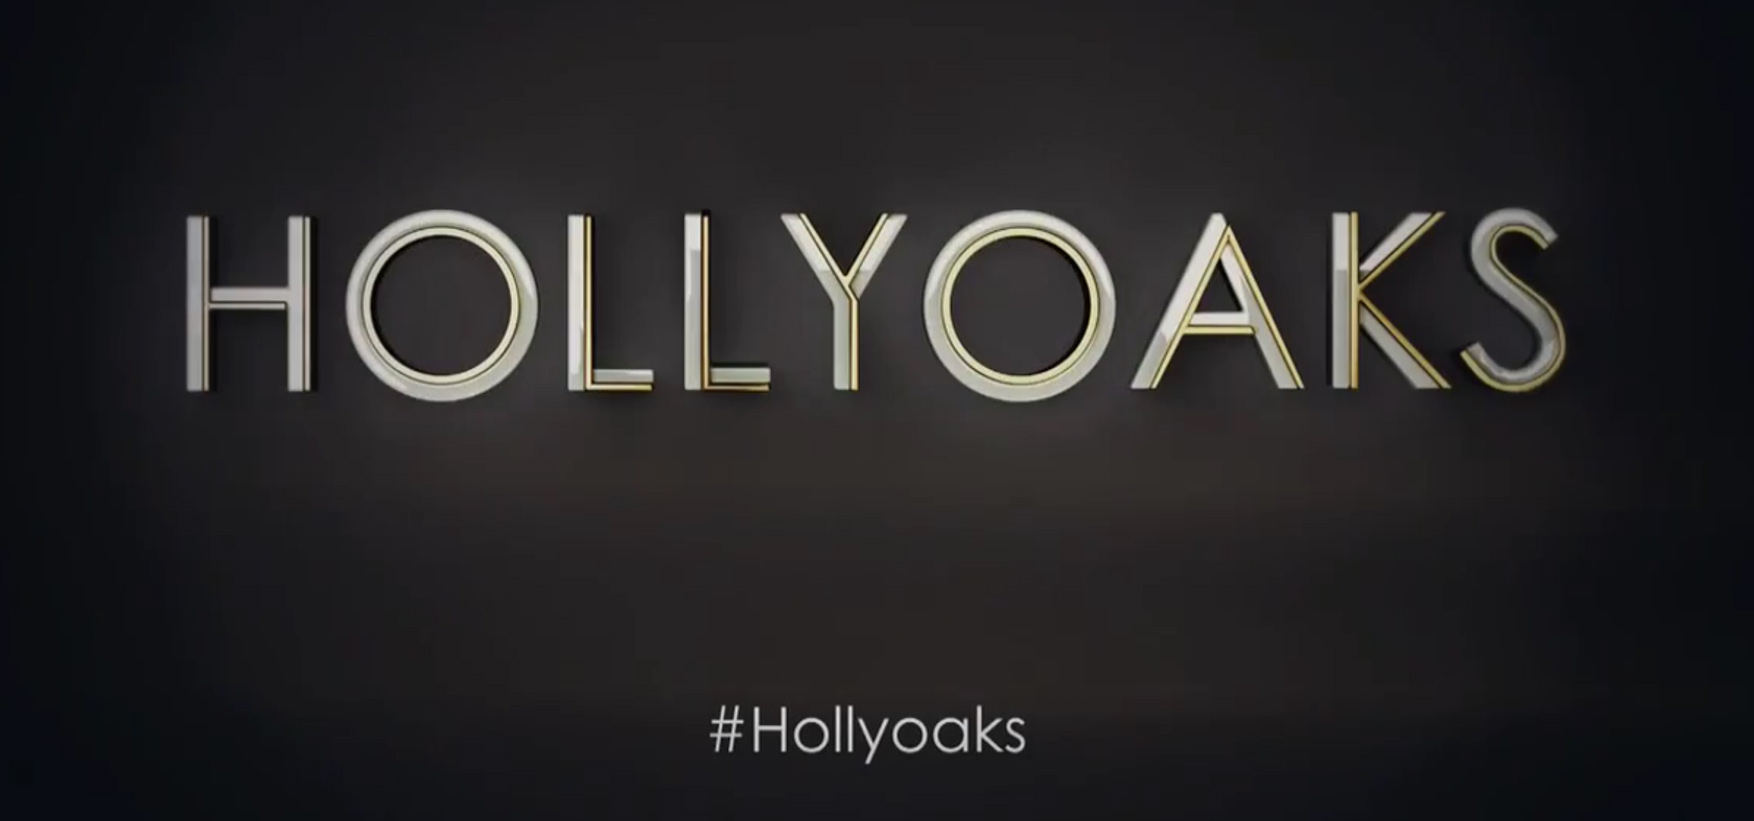 10 Reasons on Hollyoaks